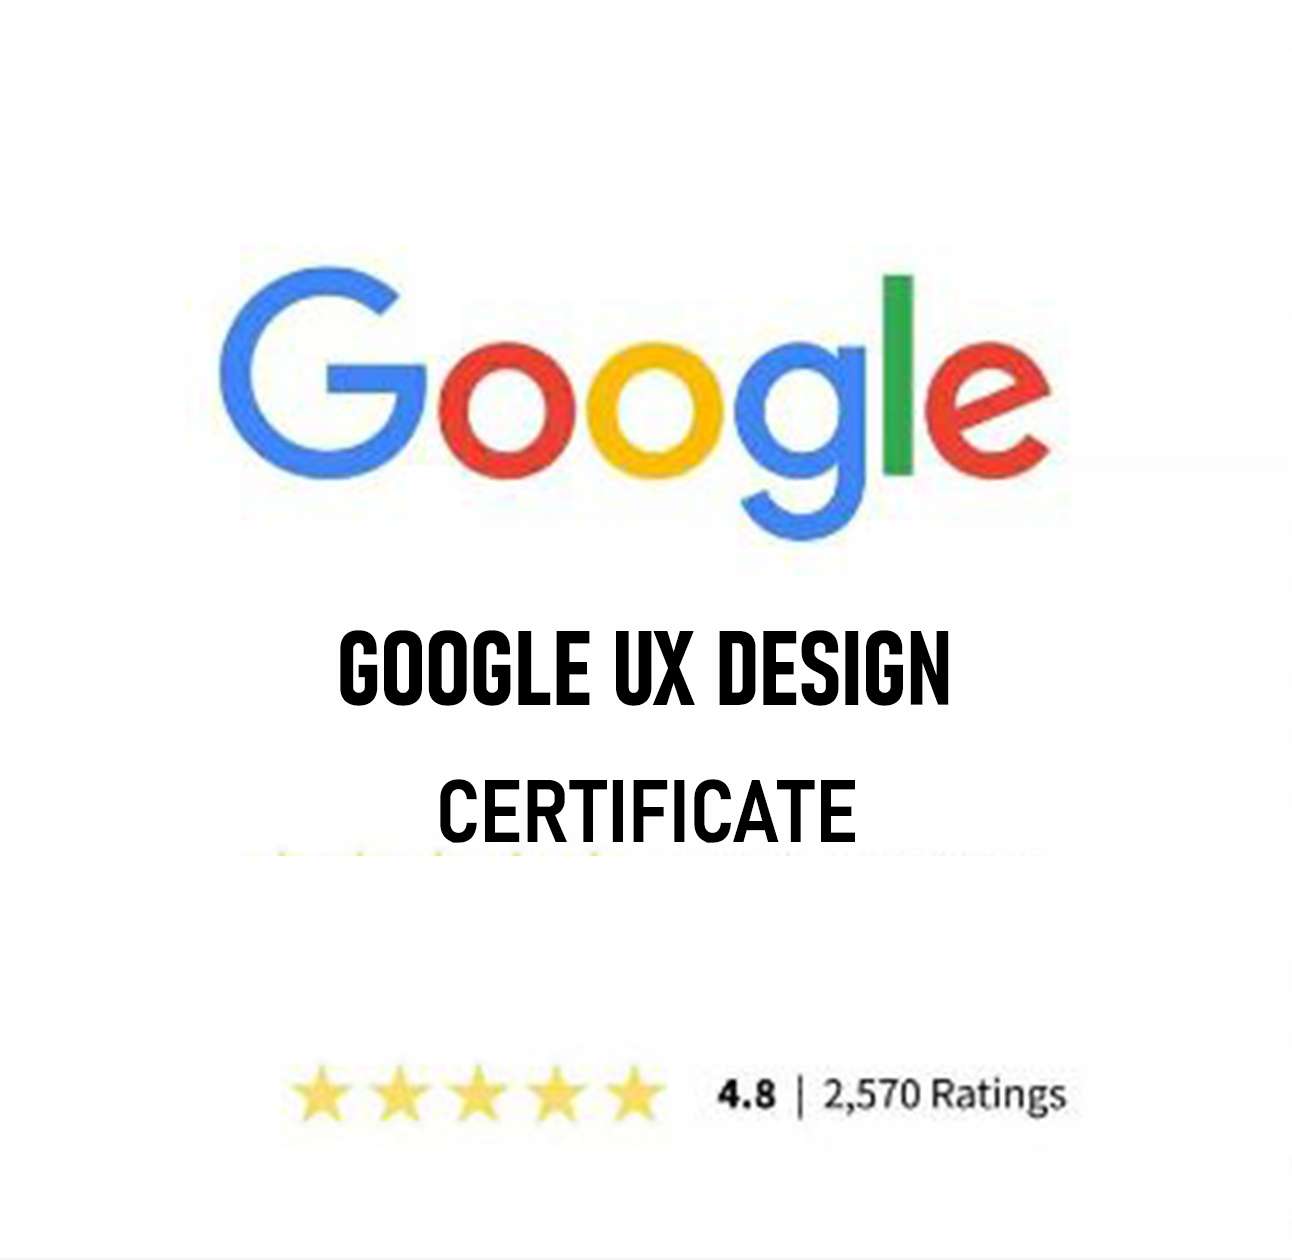 Google UX design certificate